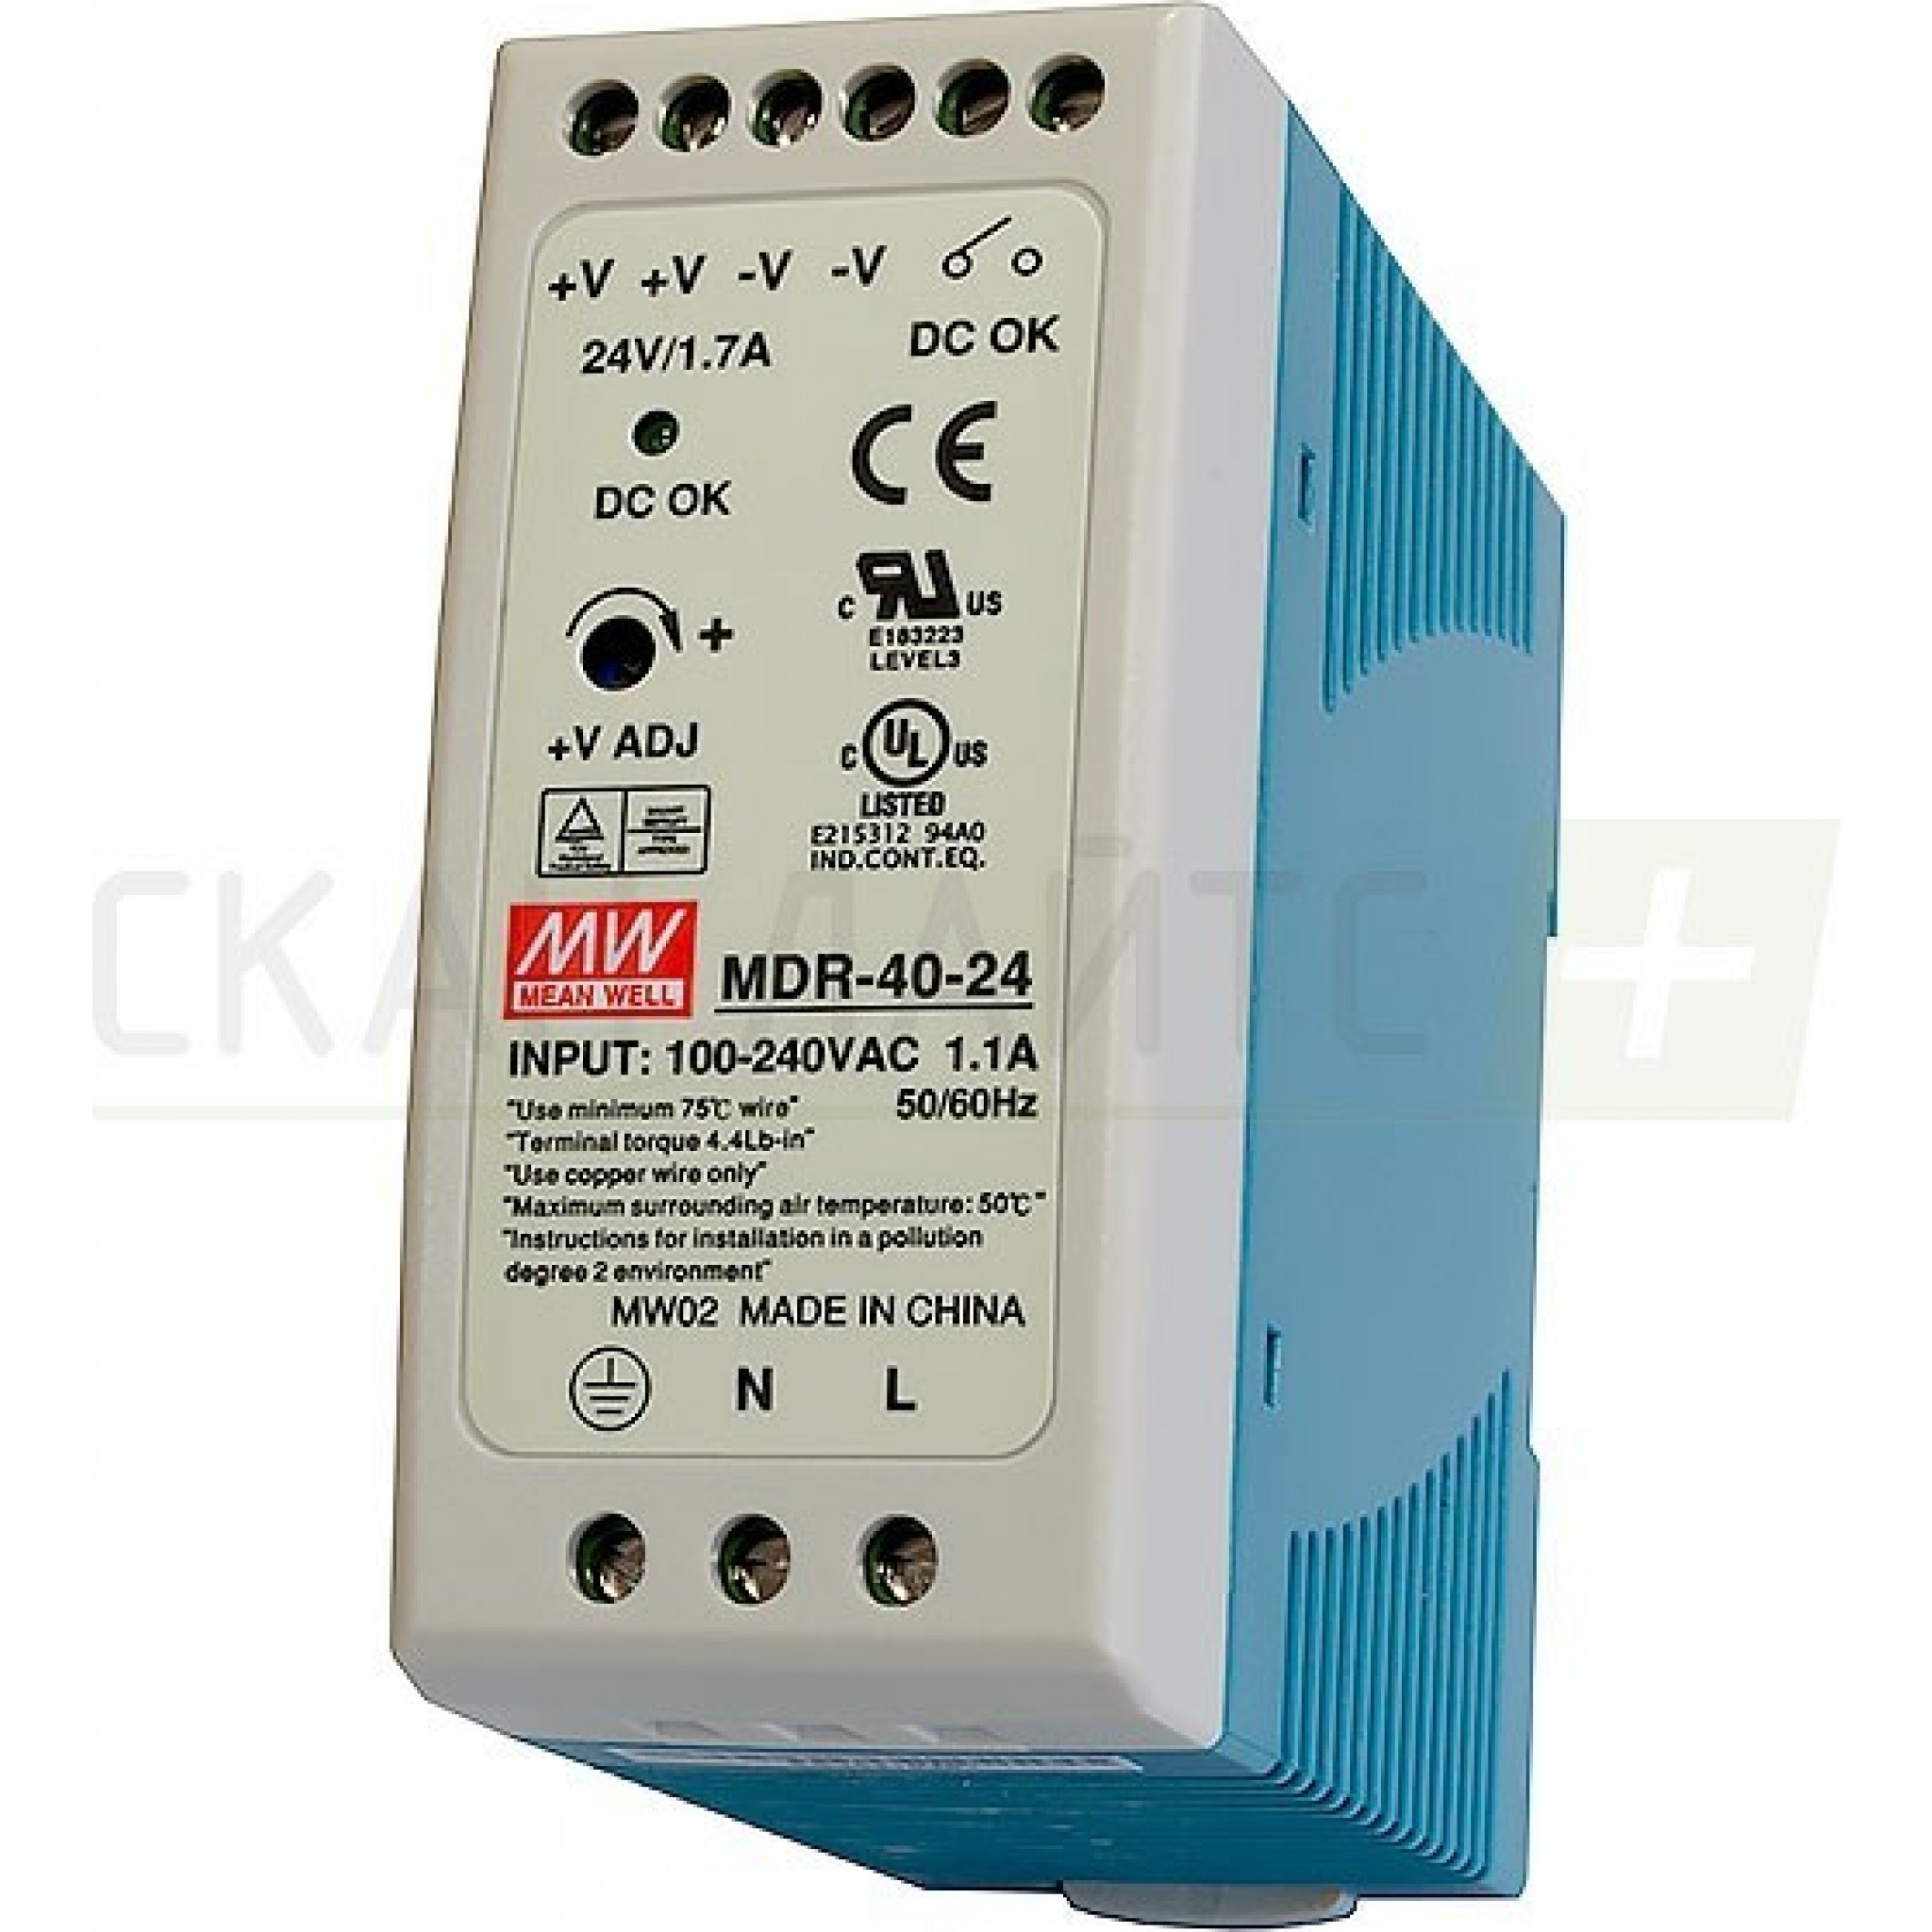 Mdr 40 24. Блок питания MDR-40-24. Блок питания для преобразователя интерфейса MDR-40-24. Moxa MDR-60-24 блок.